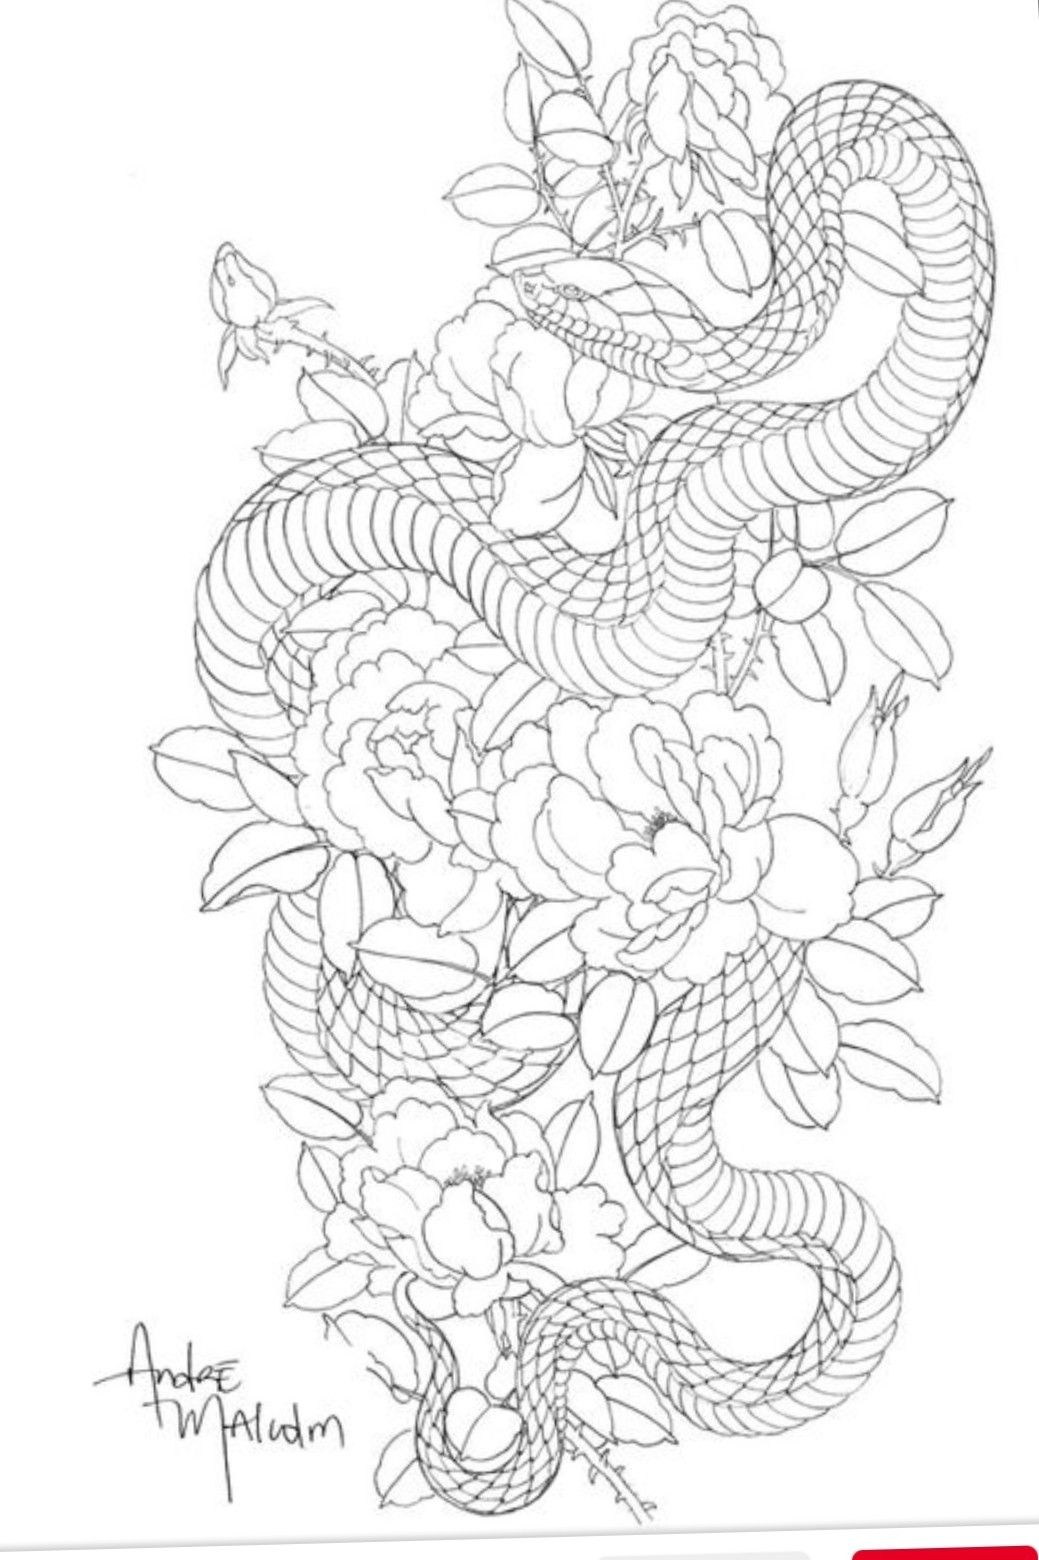 Snake Tattoo 2 by bloodempire on DeviantArt